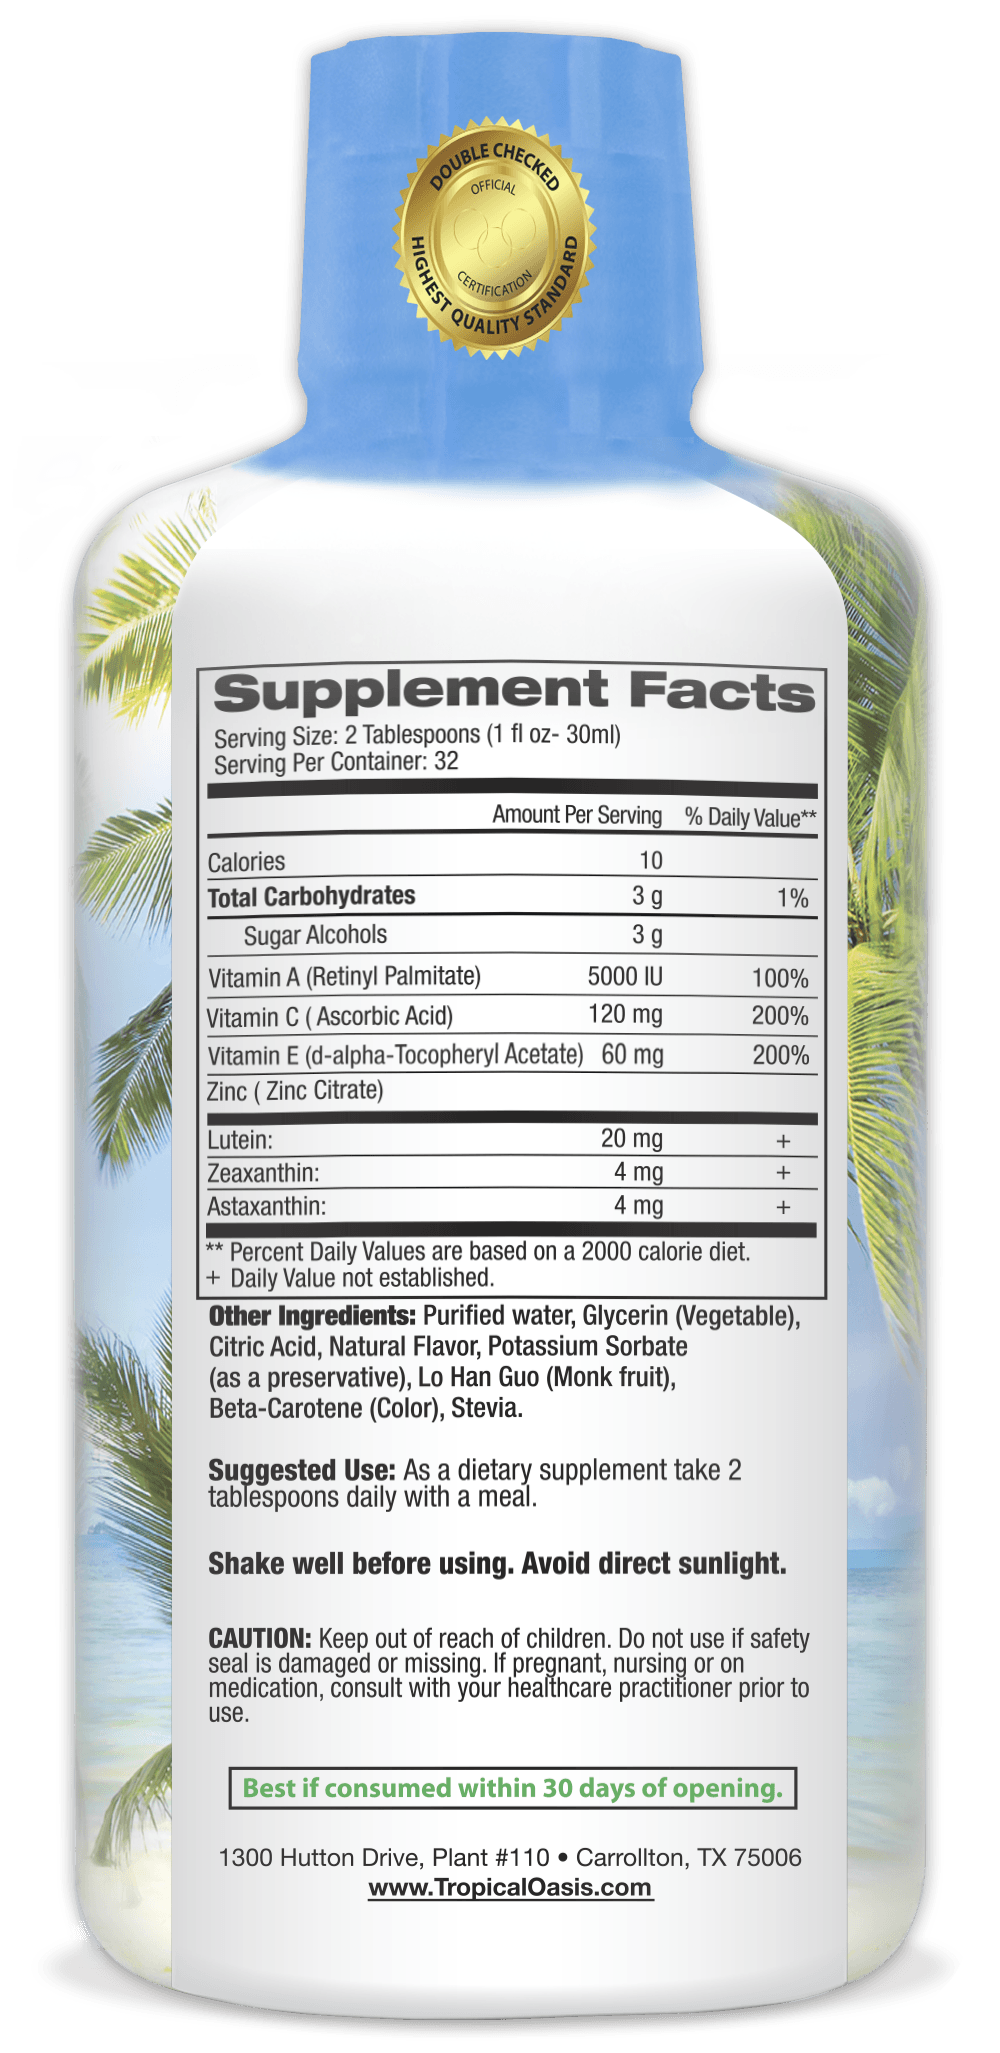 Liquid 20/20 Vision Eye Vitamin w/ 20mg Lutein - 32oz, 32 Serv. - tropical-oasis-store